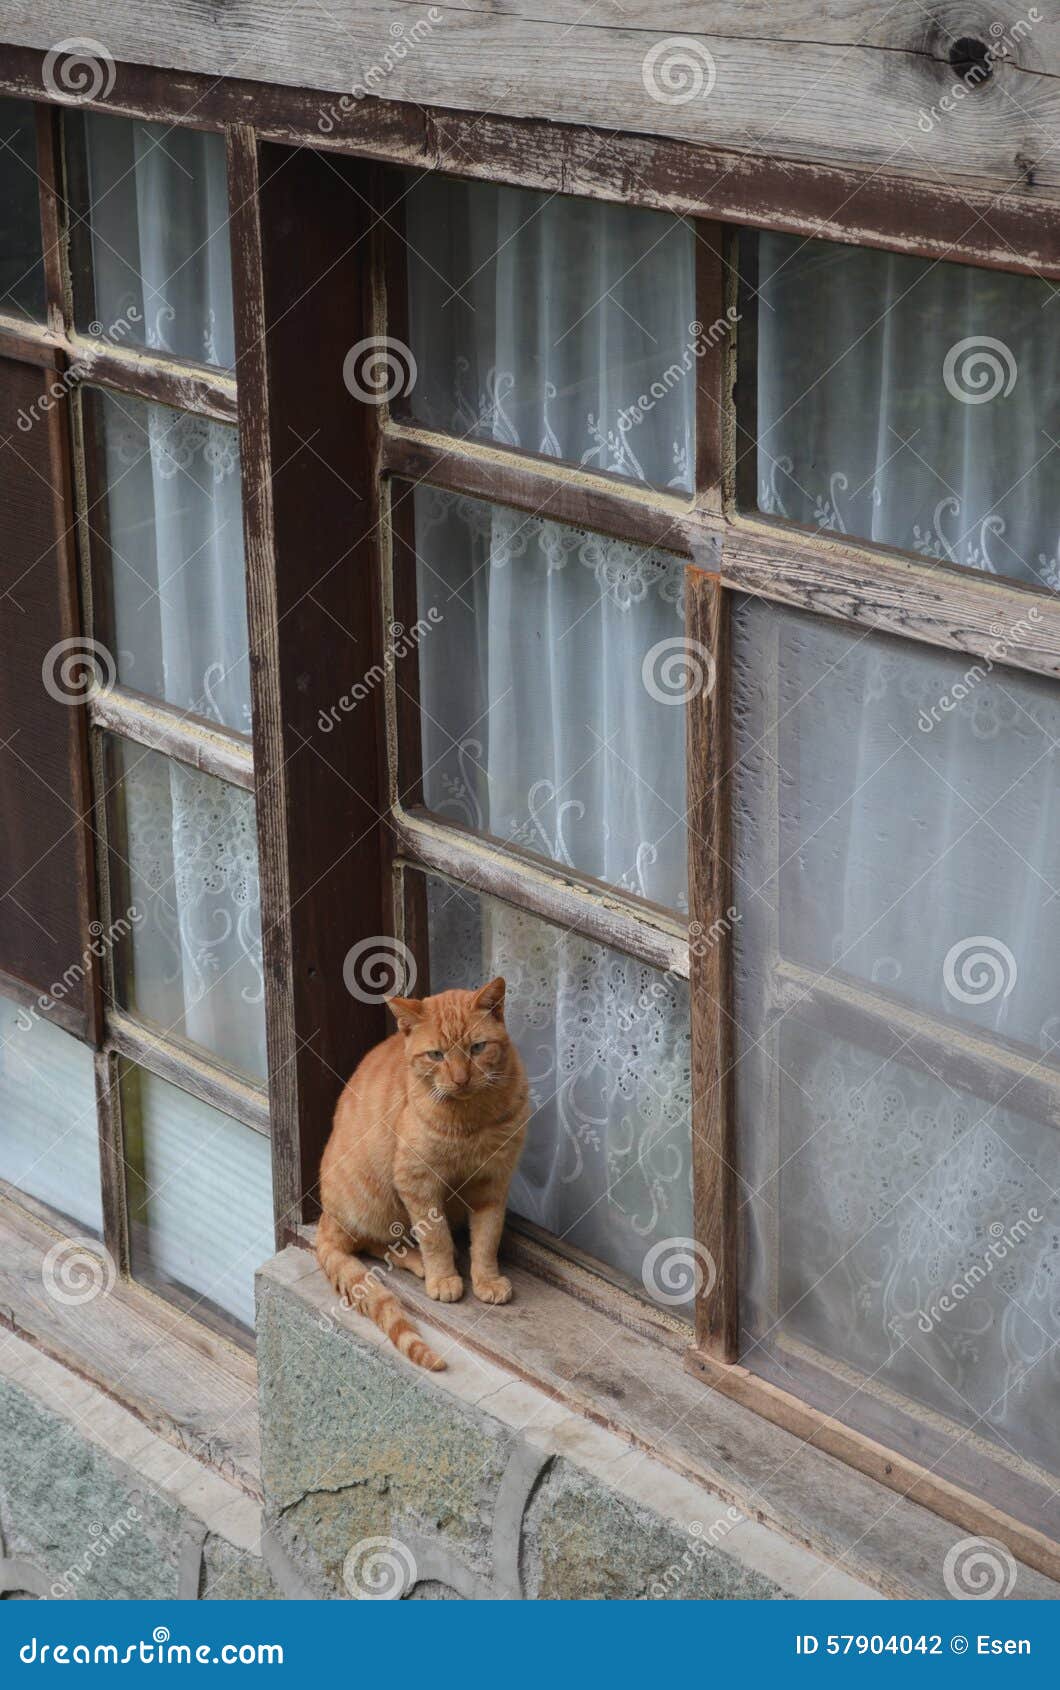 cat infront of window